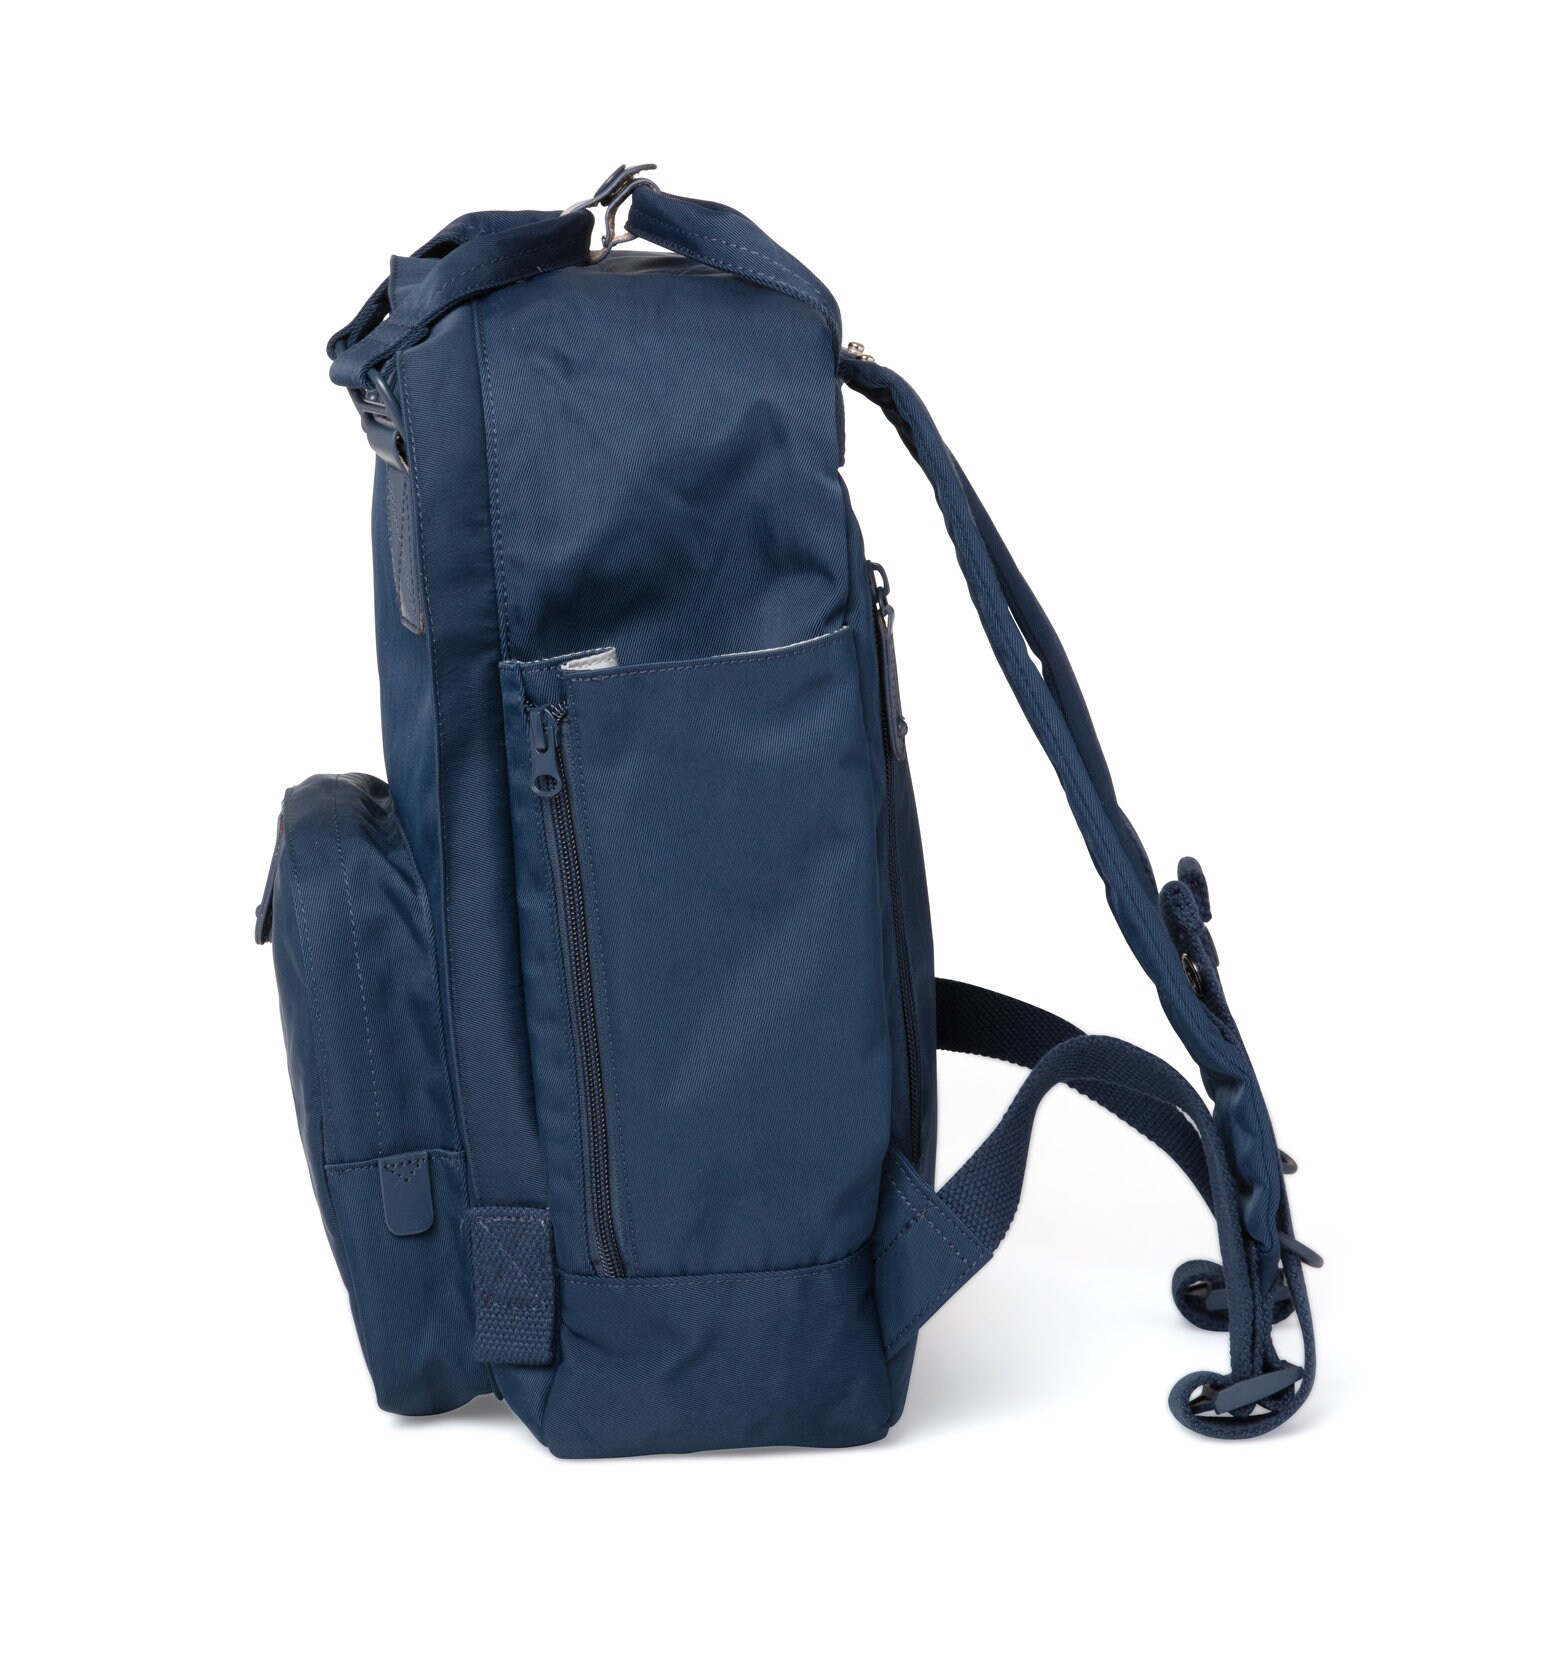 Pacific Mason Cama M Backpack Fashionable Bag handheld | Etsy